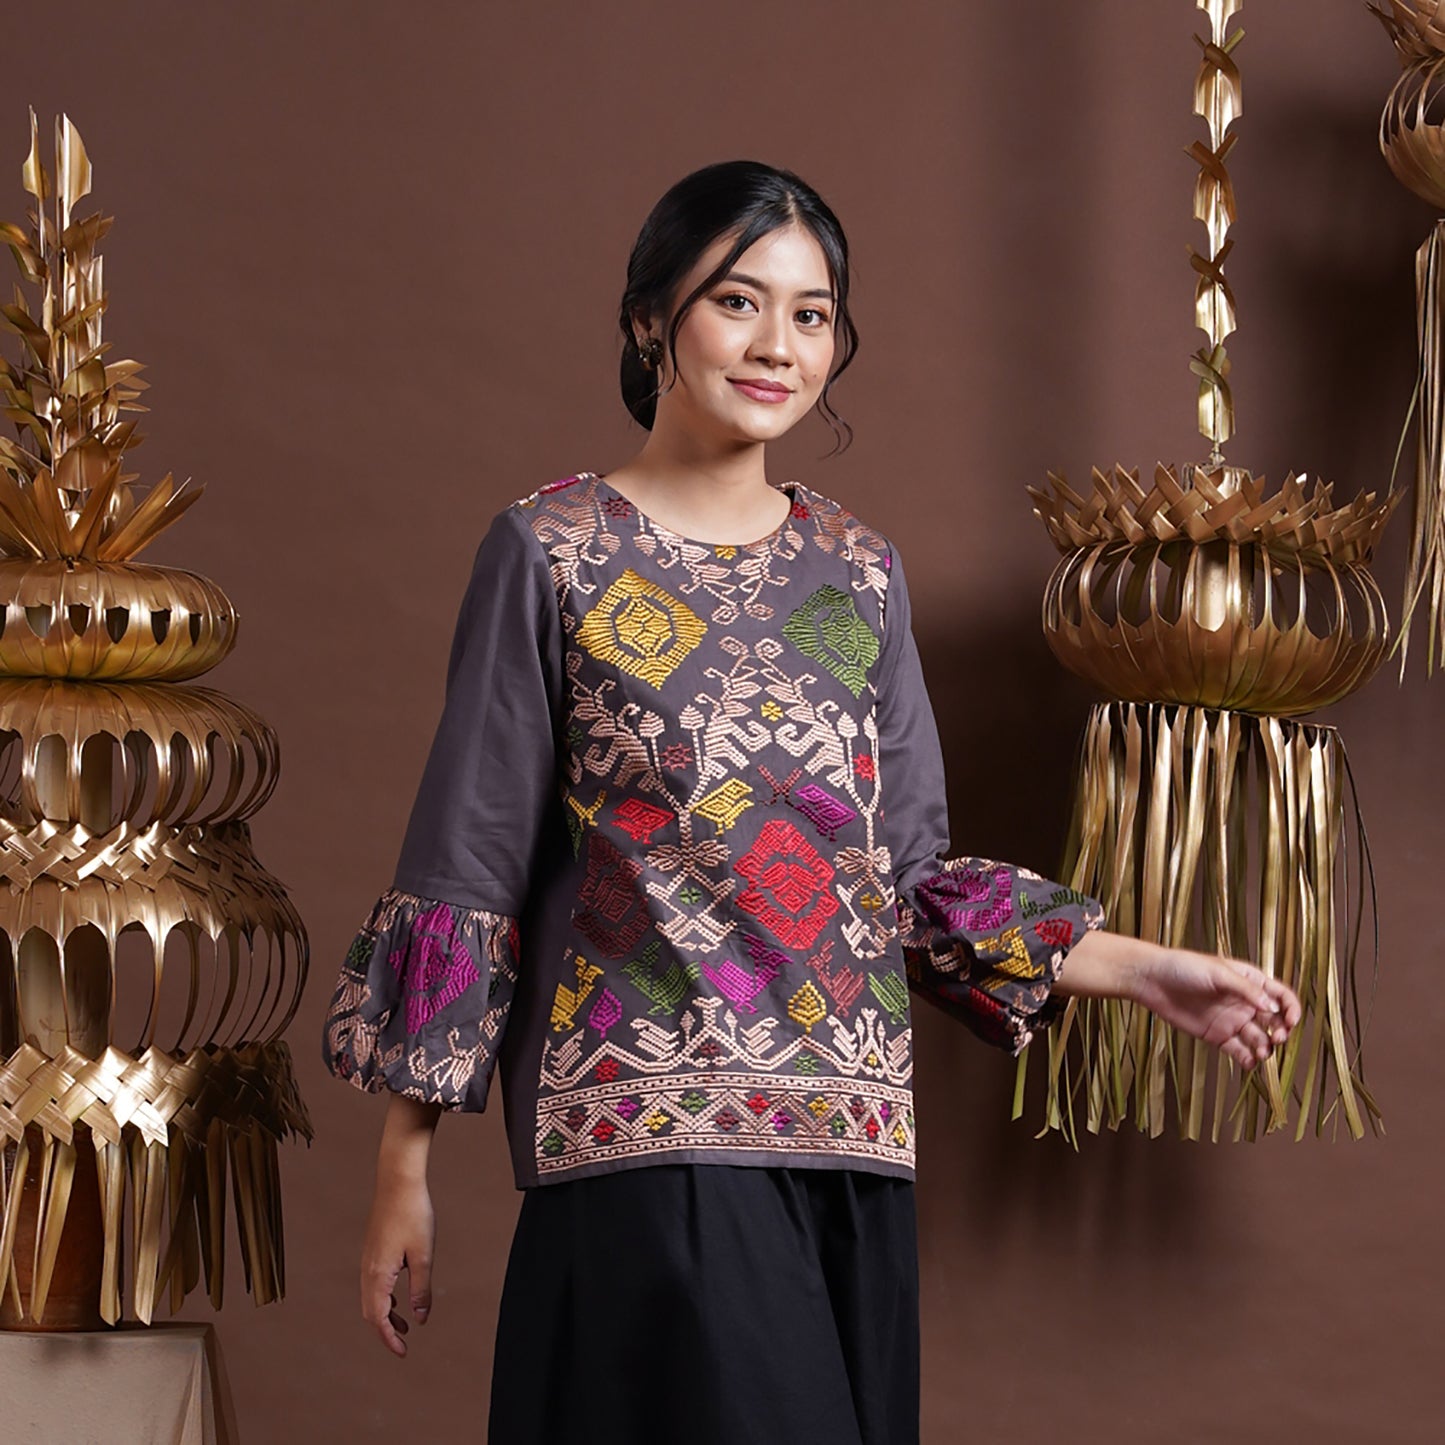 Timeless Elegance Nonarara Kiyo Suksma Bali Modern Batik Work Blouse for Women, Women Blouse, Batik Blouse